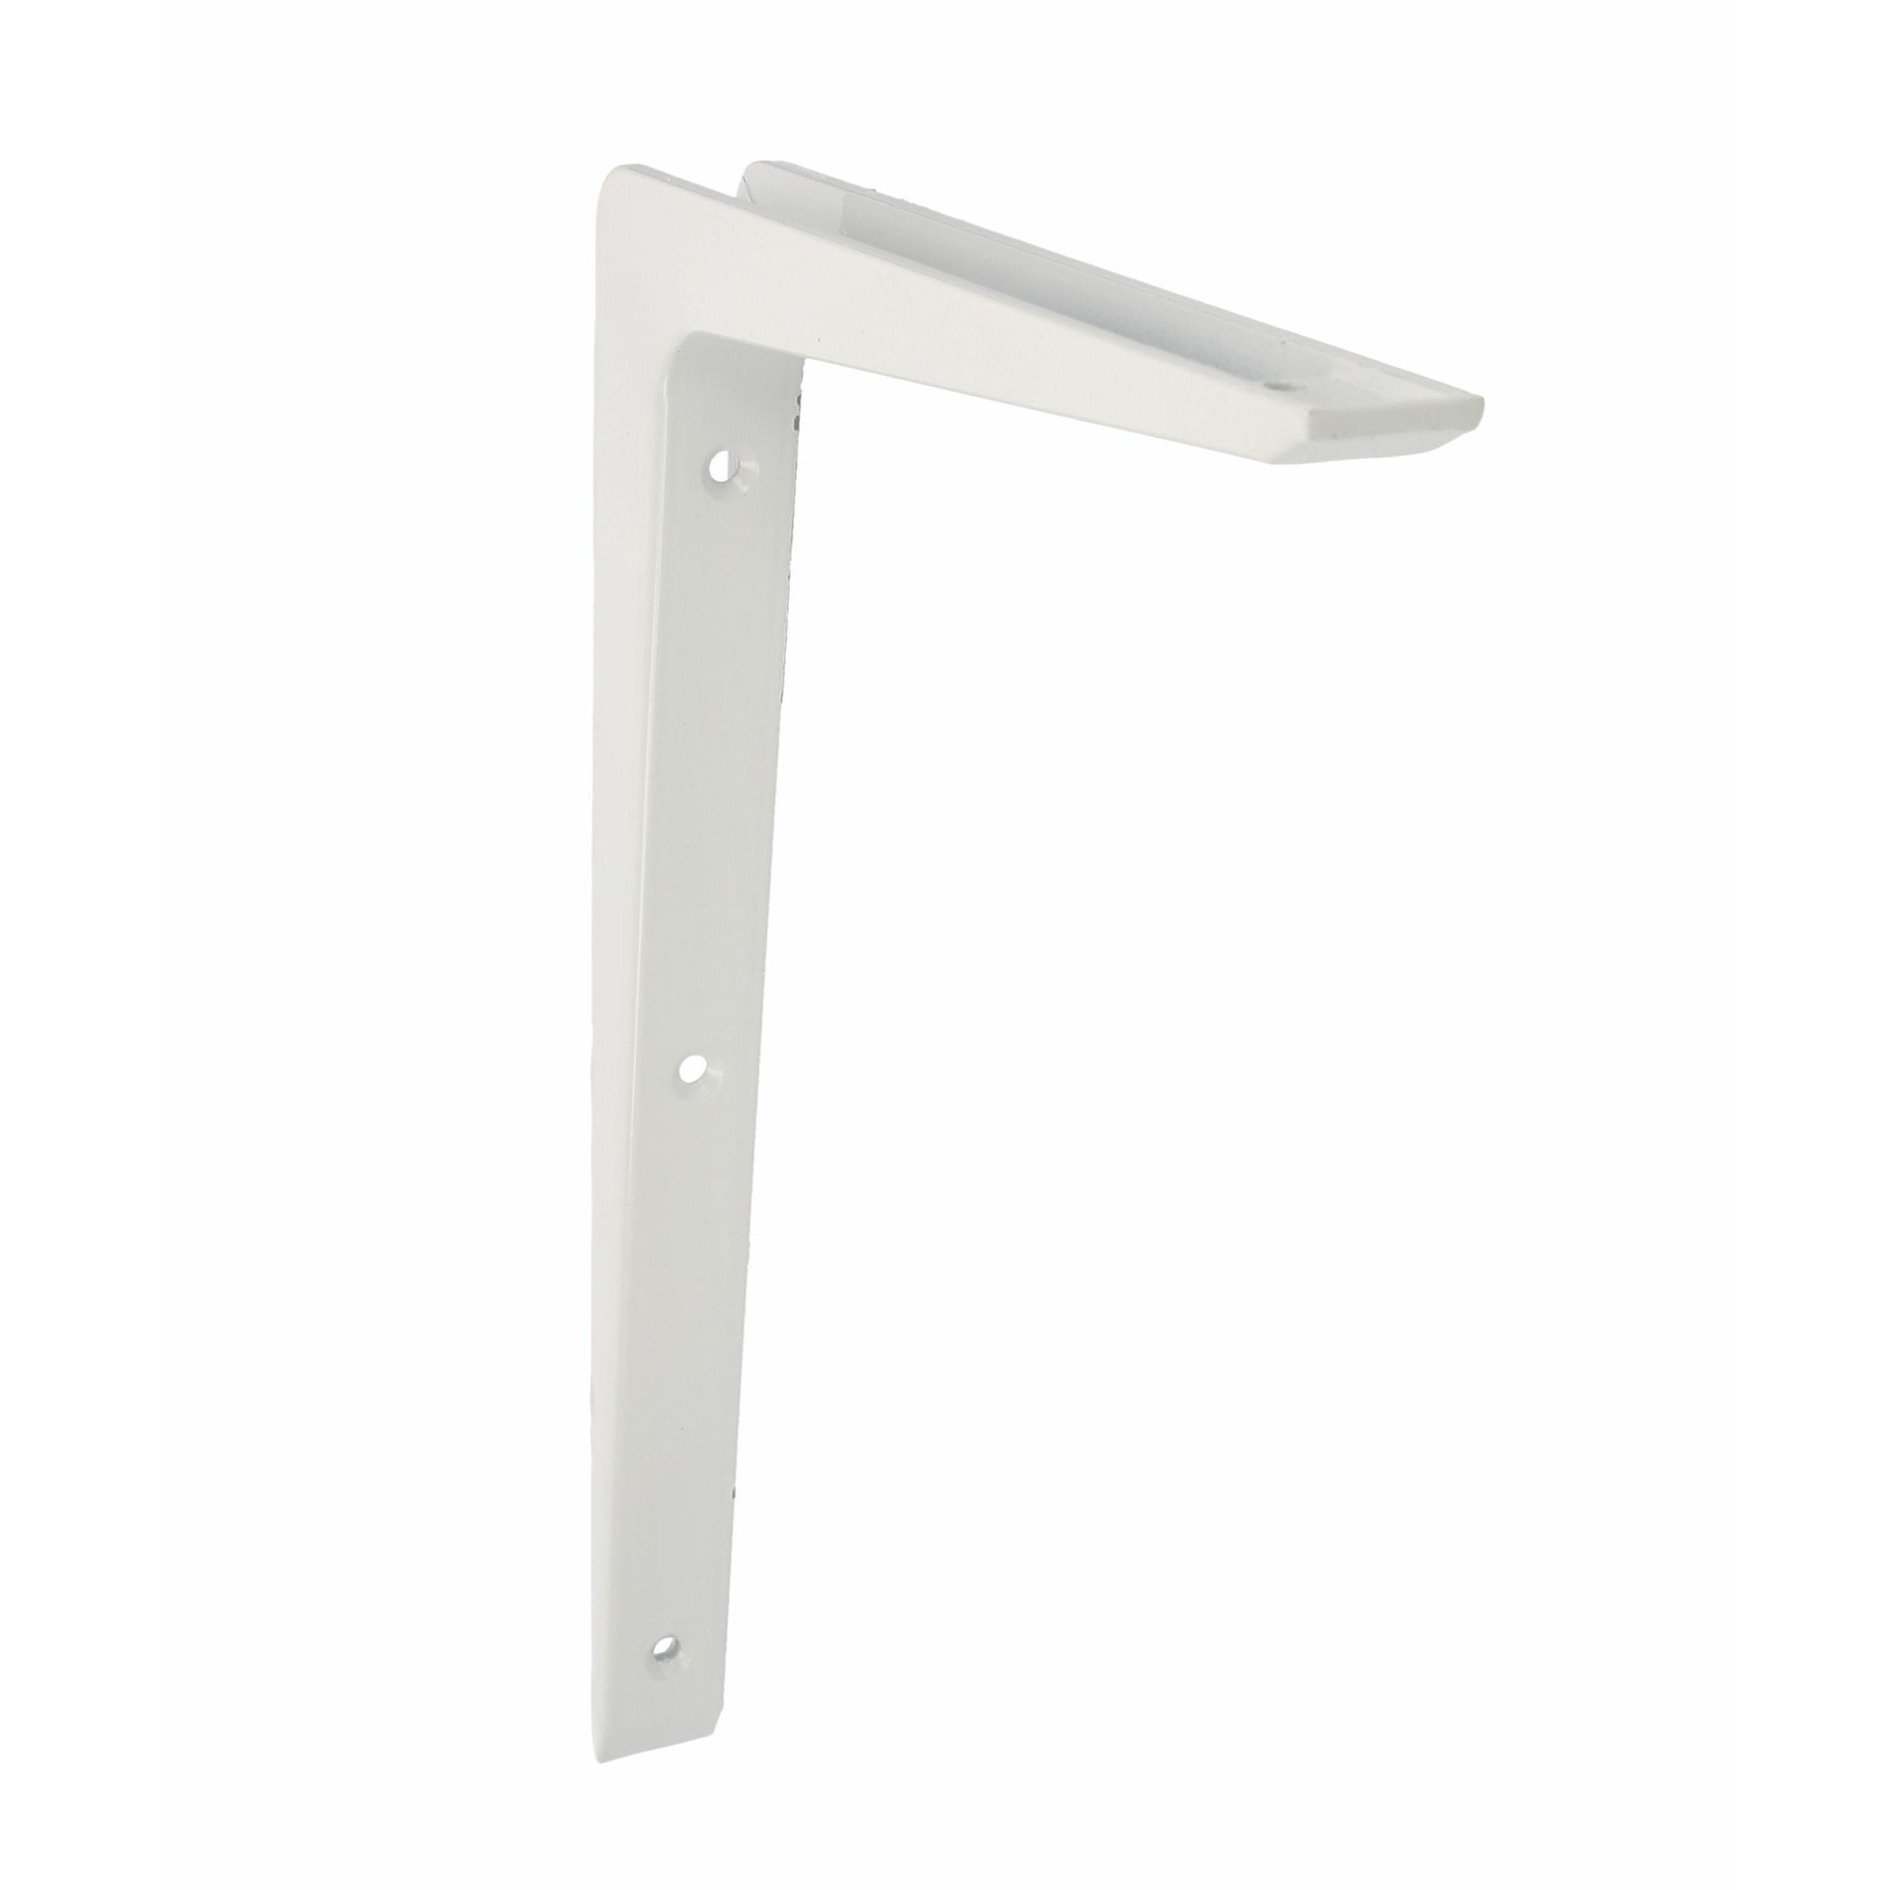 AMIG Plankdrager-planksteun van aluminium gelakt wit H250 x B200 mm